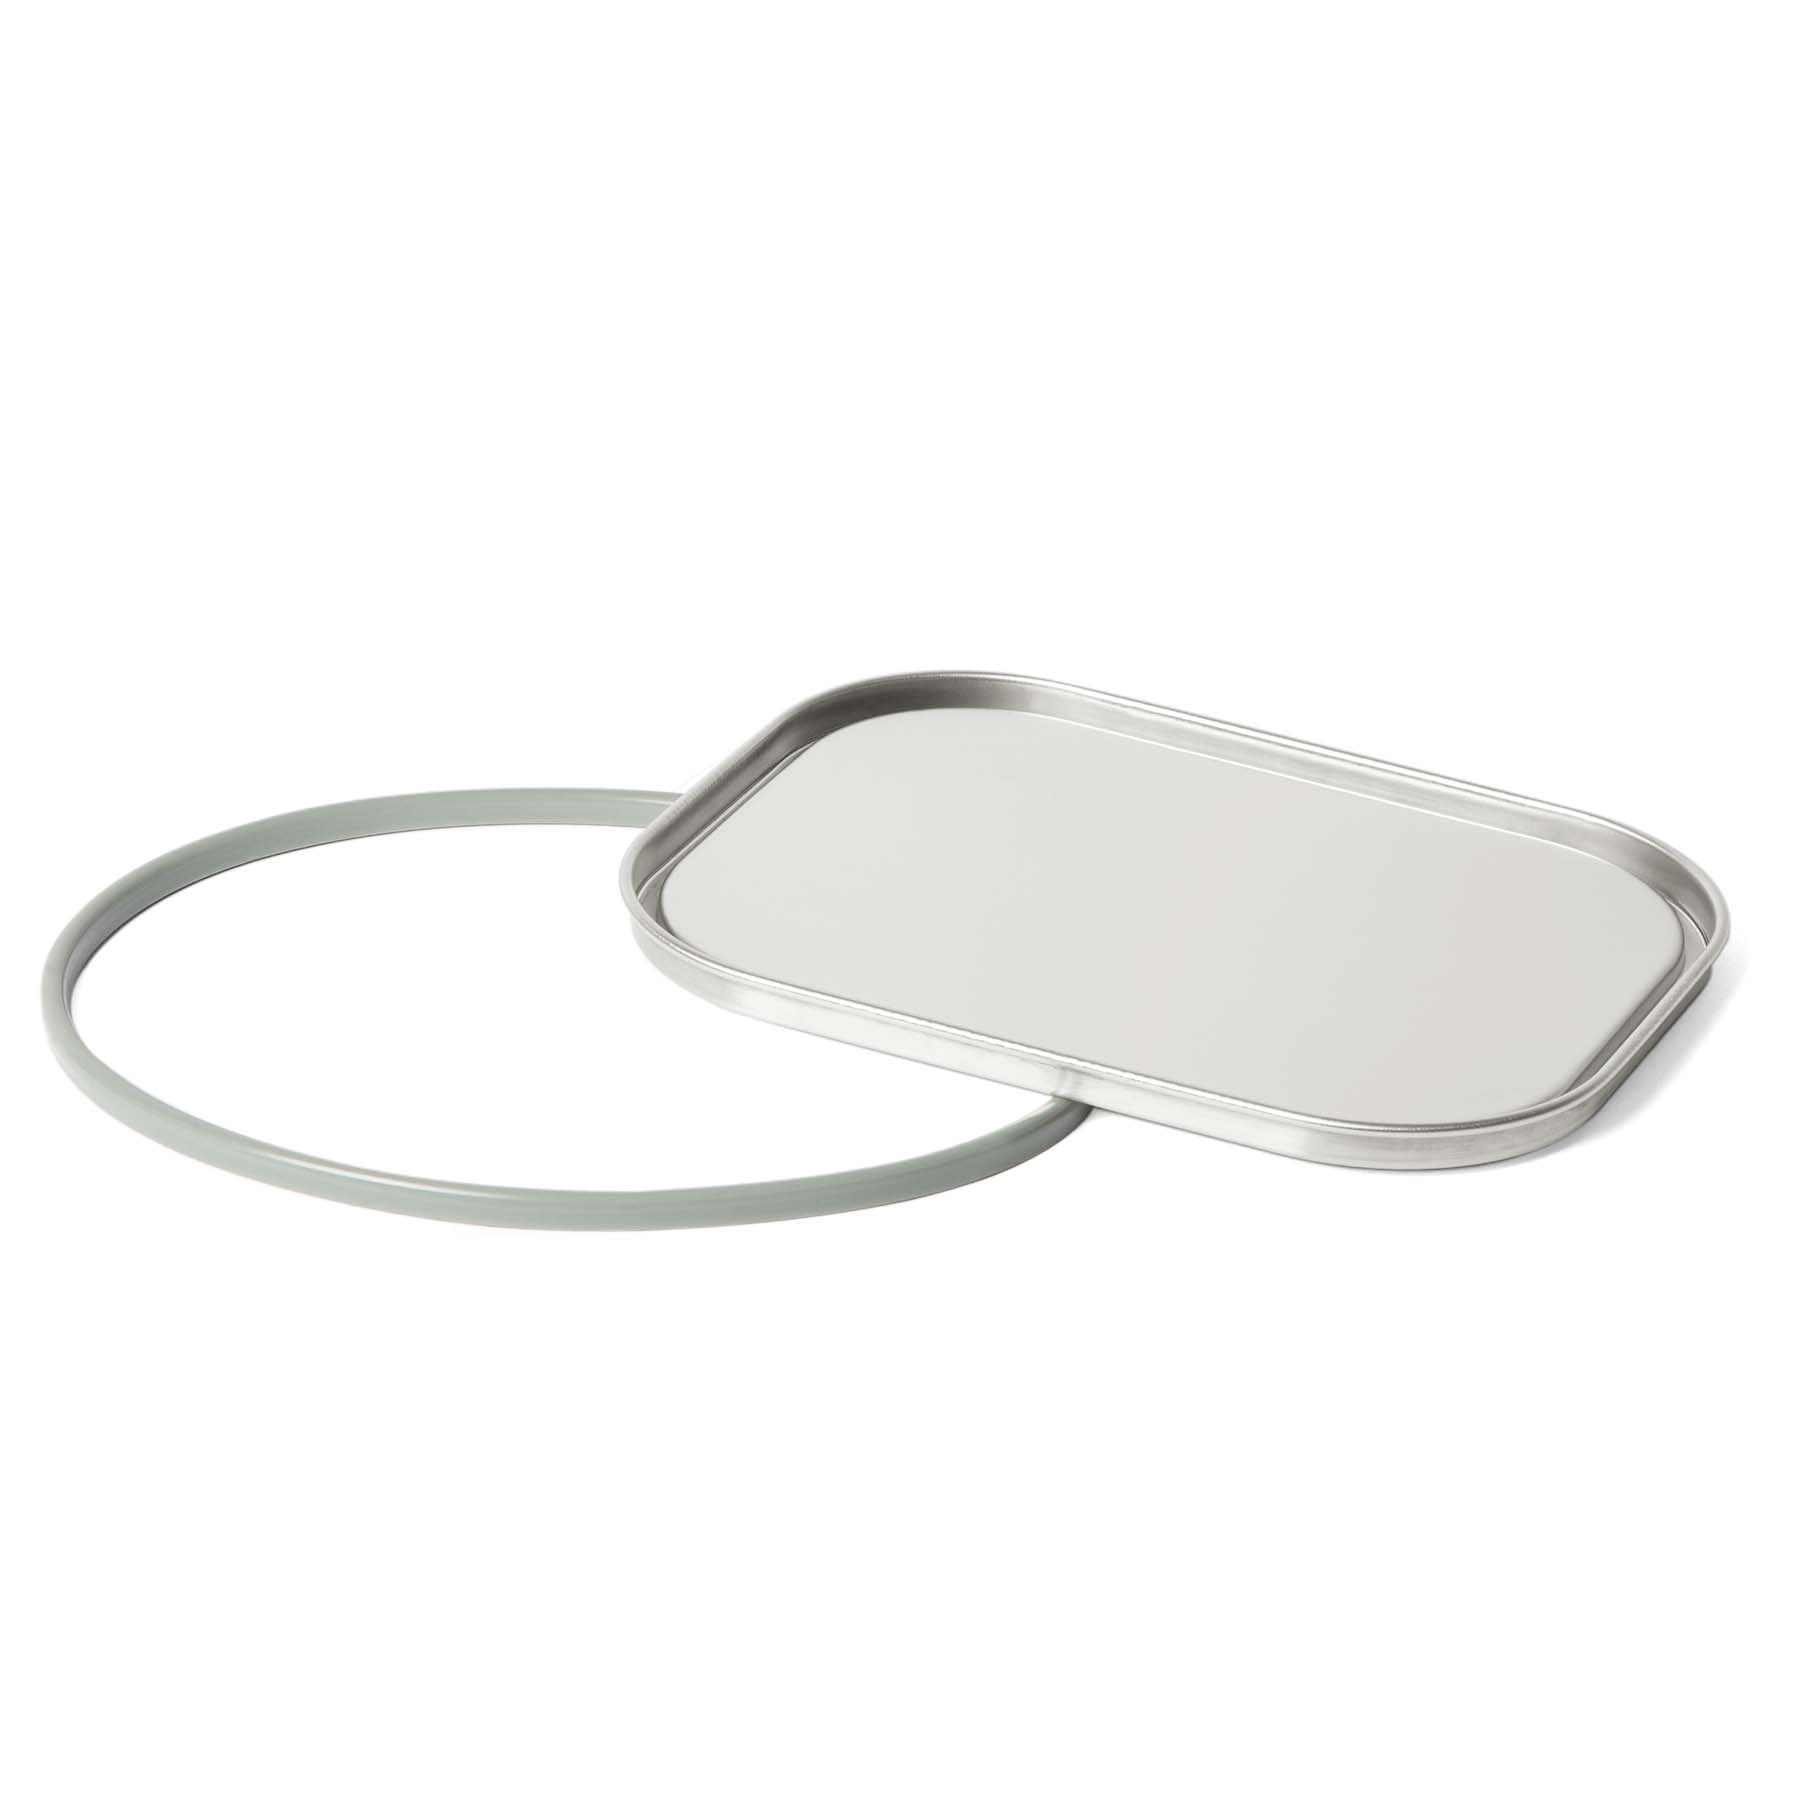 Silicone ring for Bento Flex+